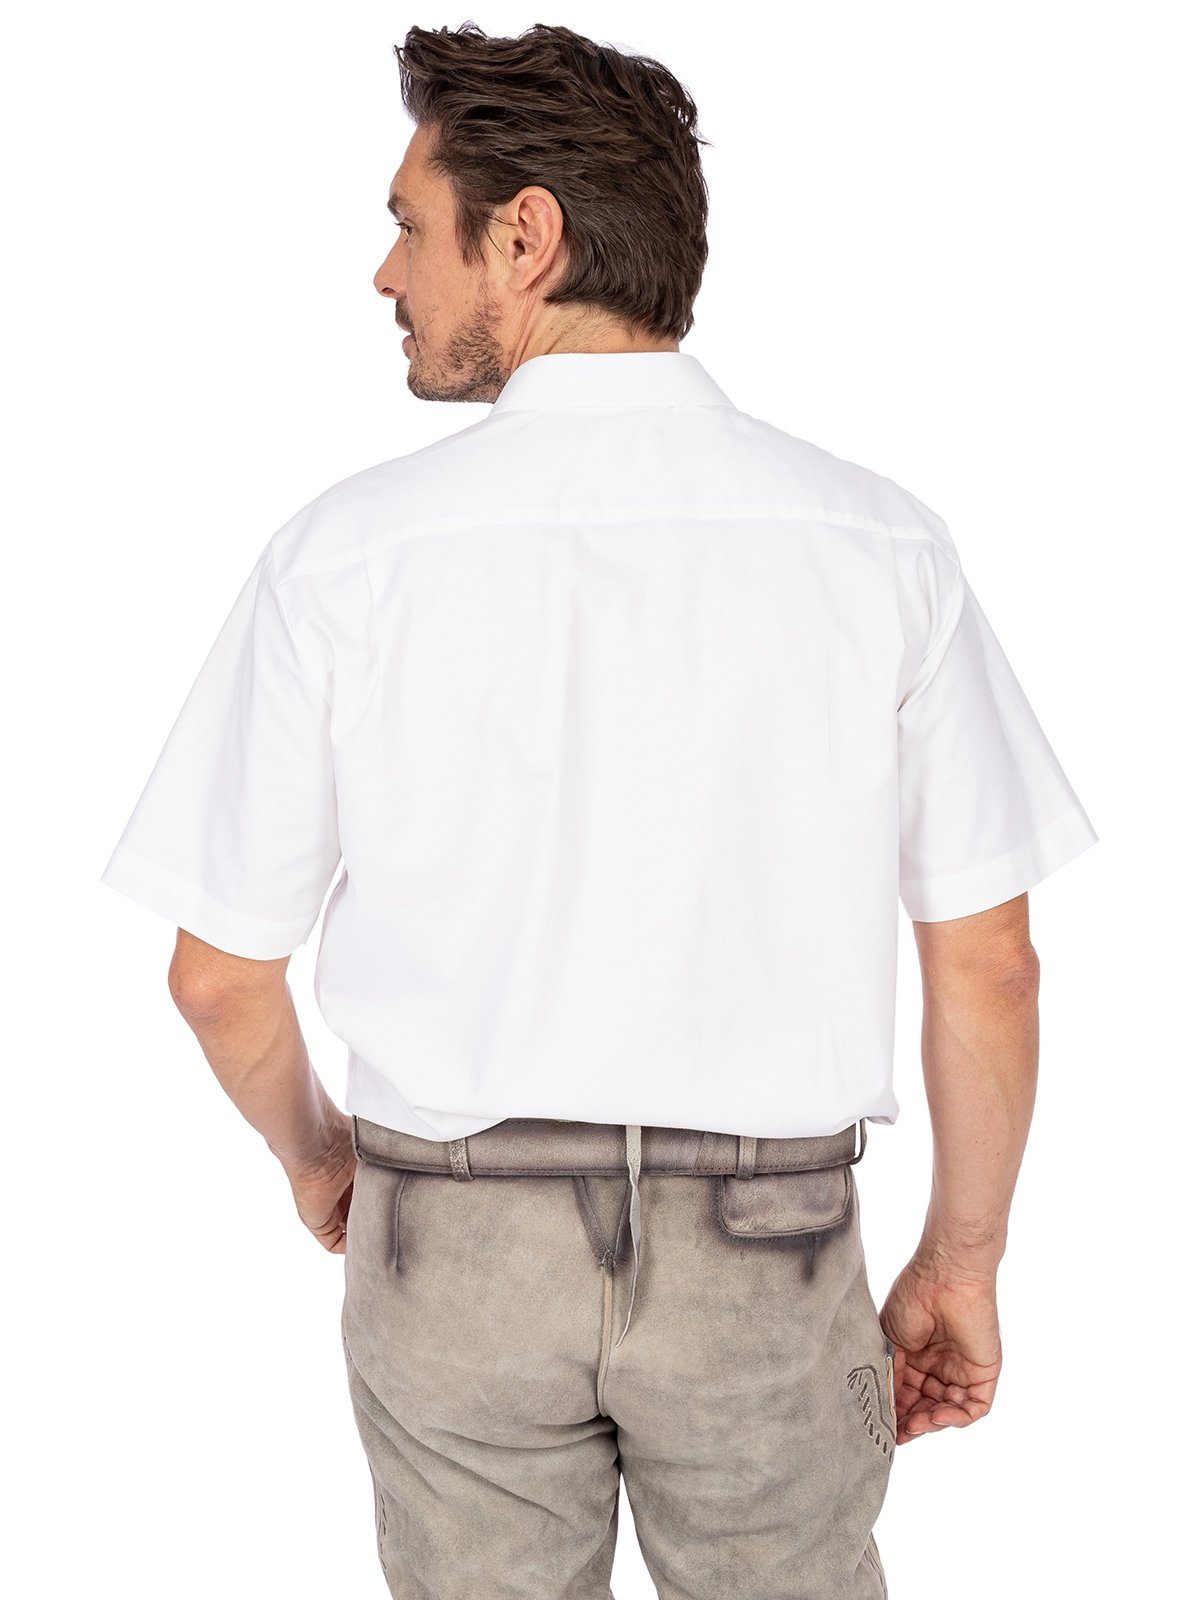 Trachtenhemd OS-Trachten Biesen F EDGAR weiss Trachtenhemd Halbarm (Regular